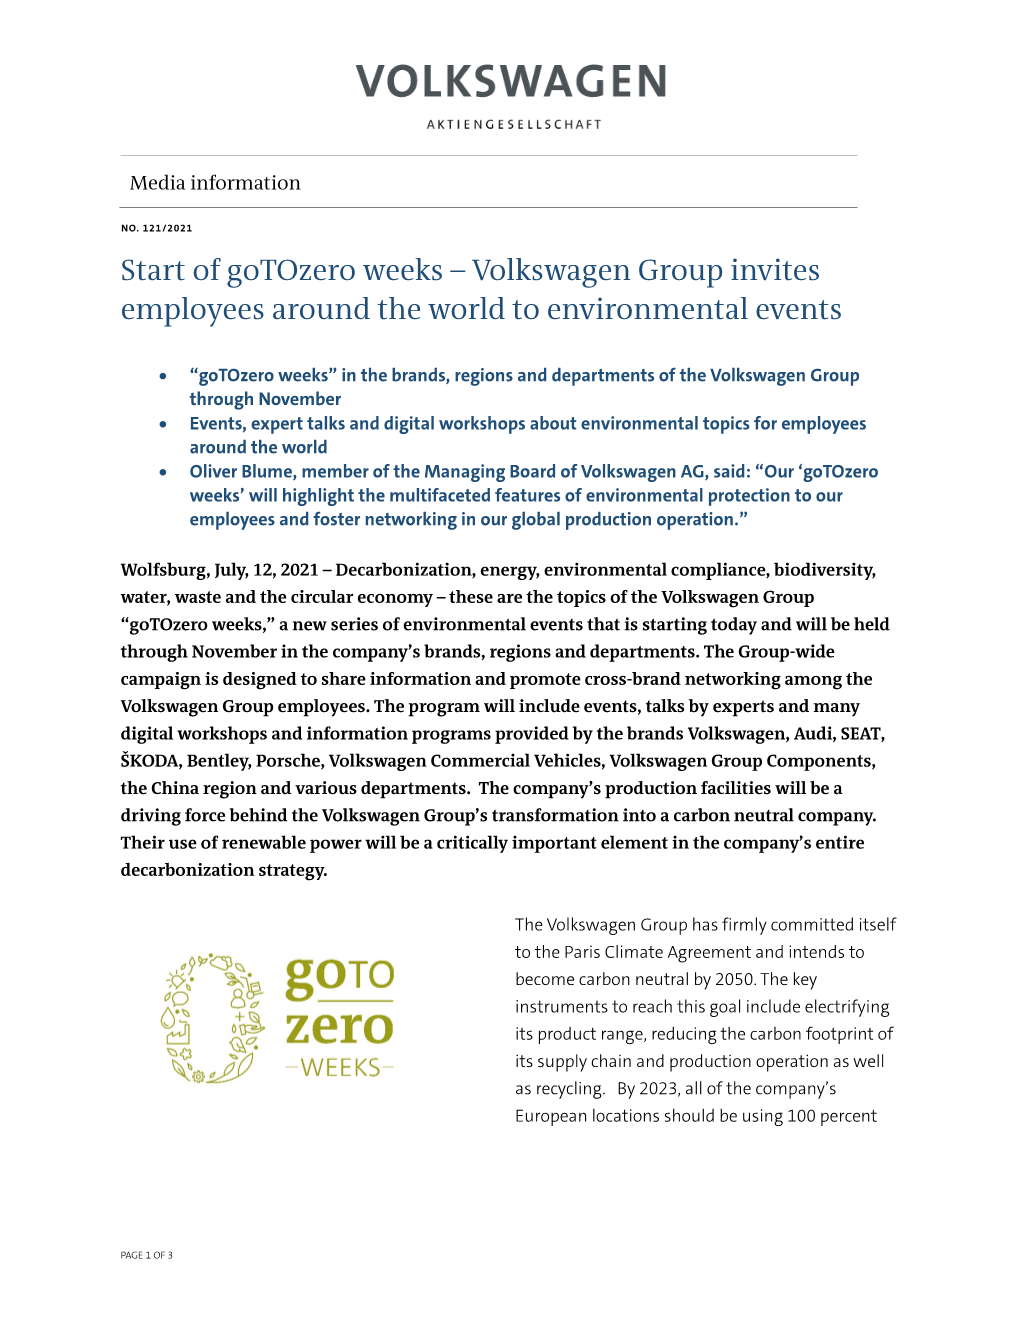 Start of Gotozero Weeks – Volkswagen Group Invites Employees Around the World to Environmental Events